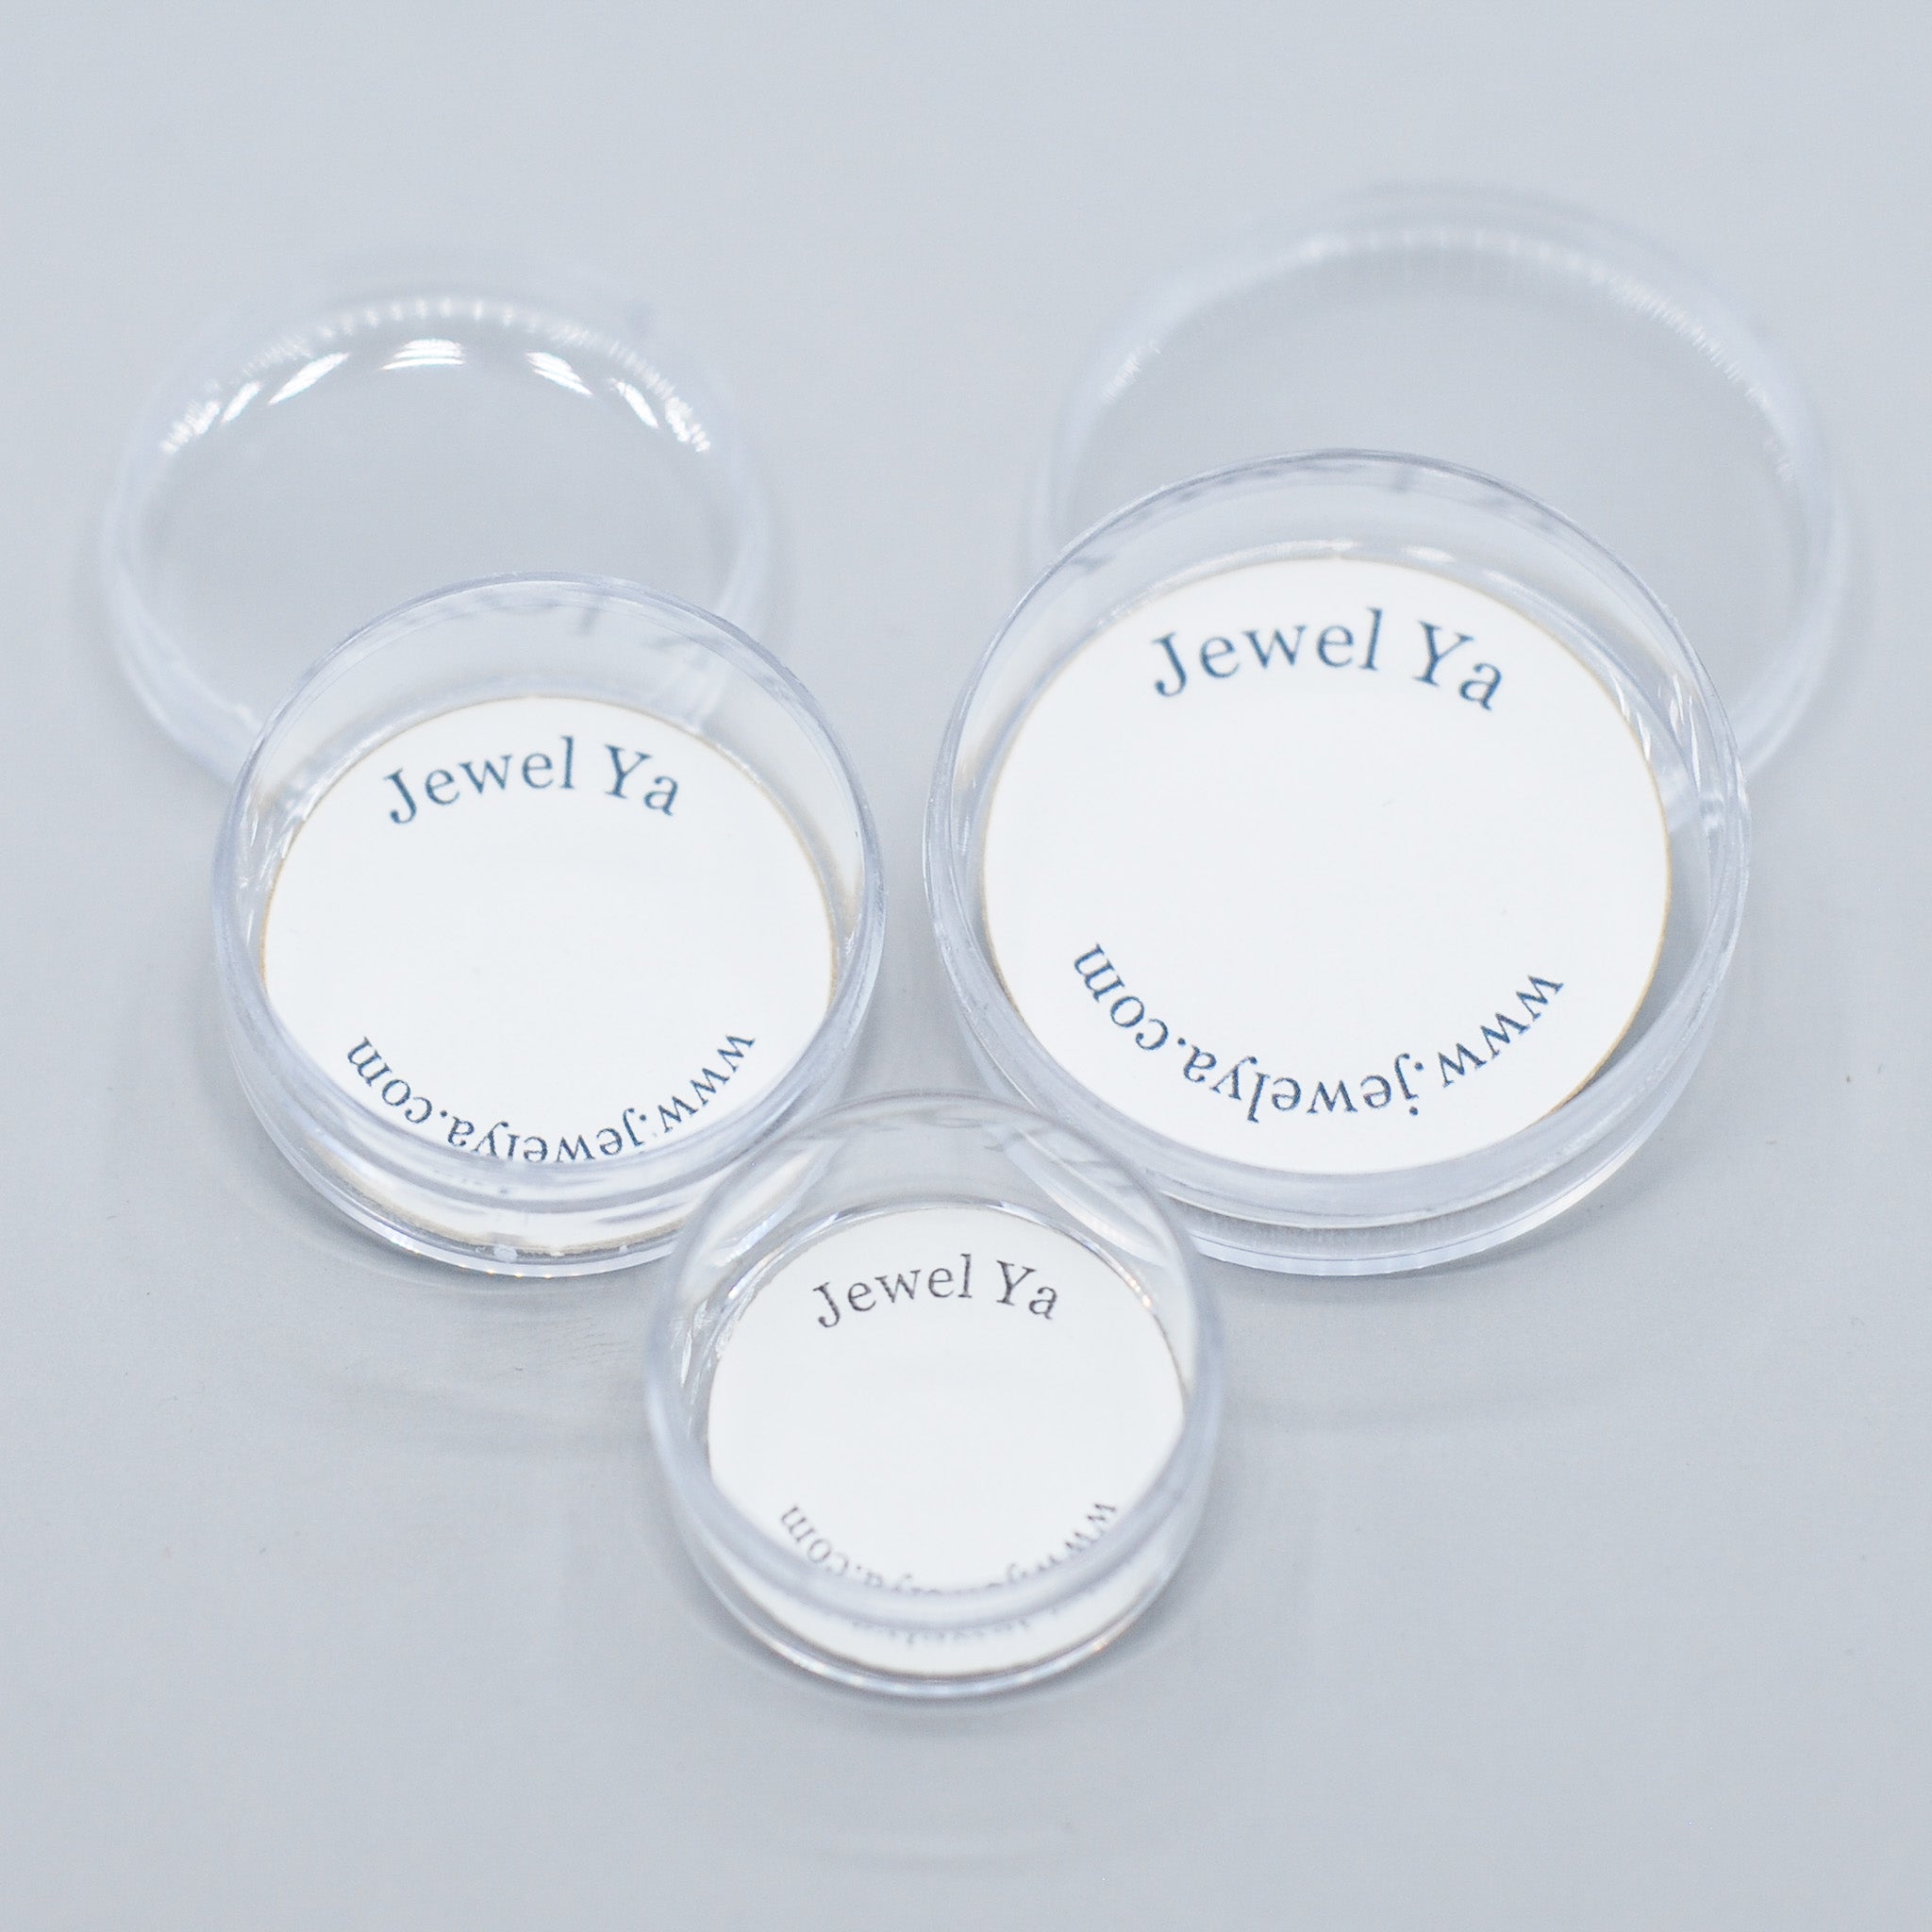 Mixed Metal Beaded Lux Heart Bracelet Set - Jewel Ya